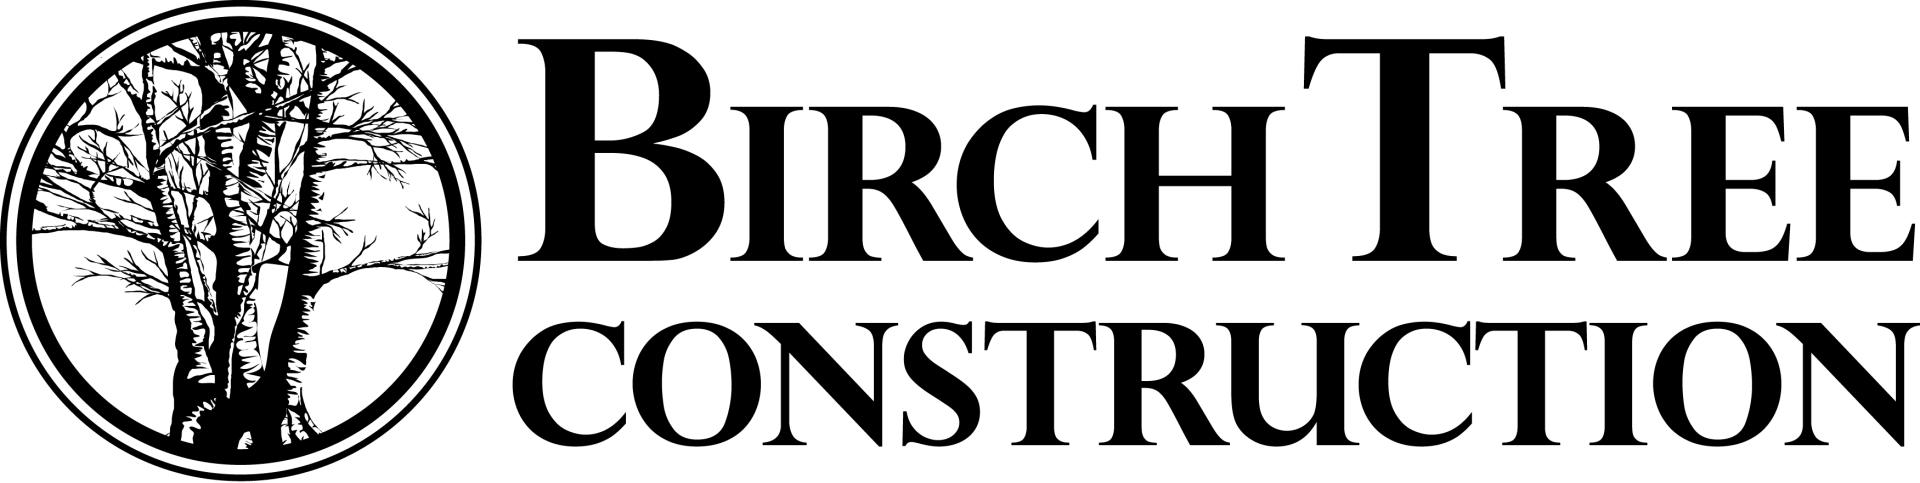 BirchTree Construction